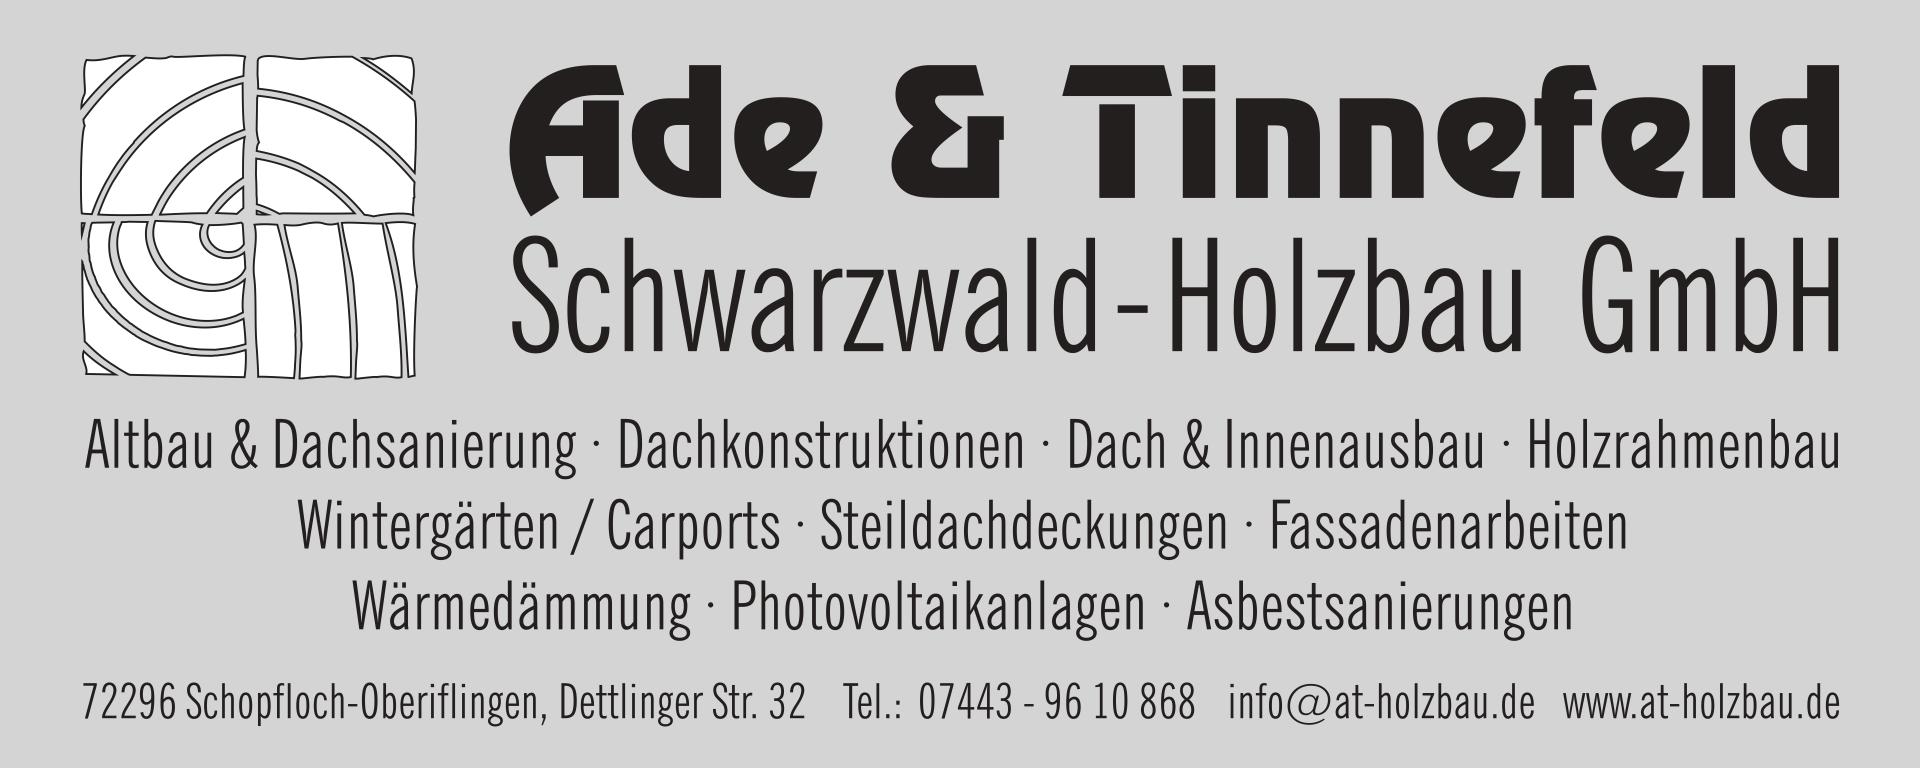 ADE & TINNEFELD SCHWARZWALD - HOLZBAU GmbH